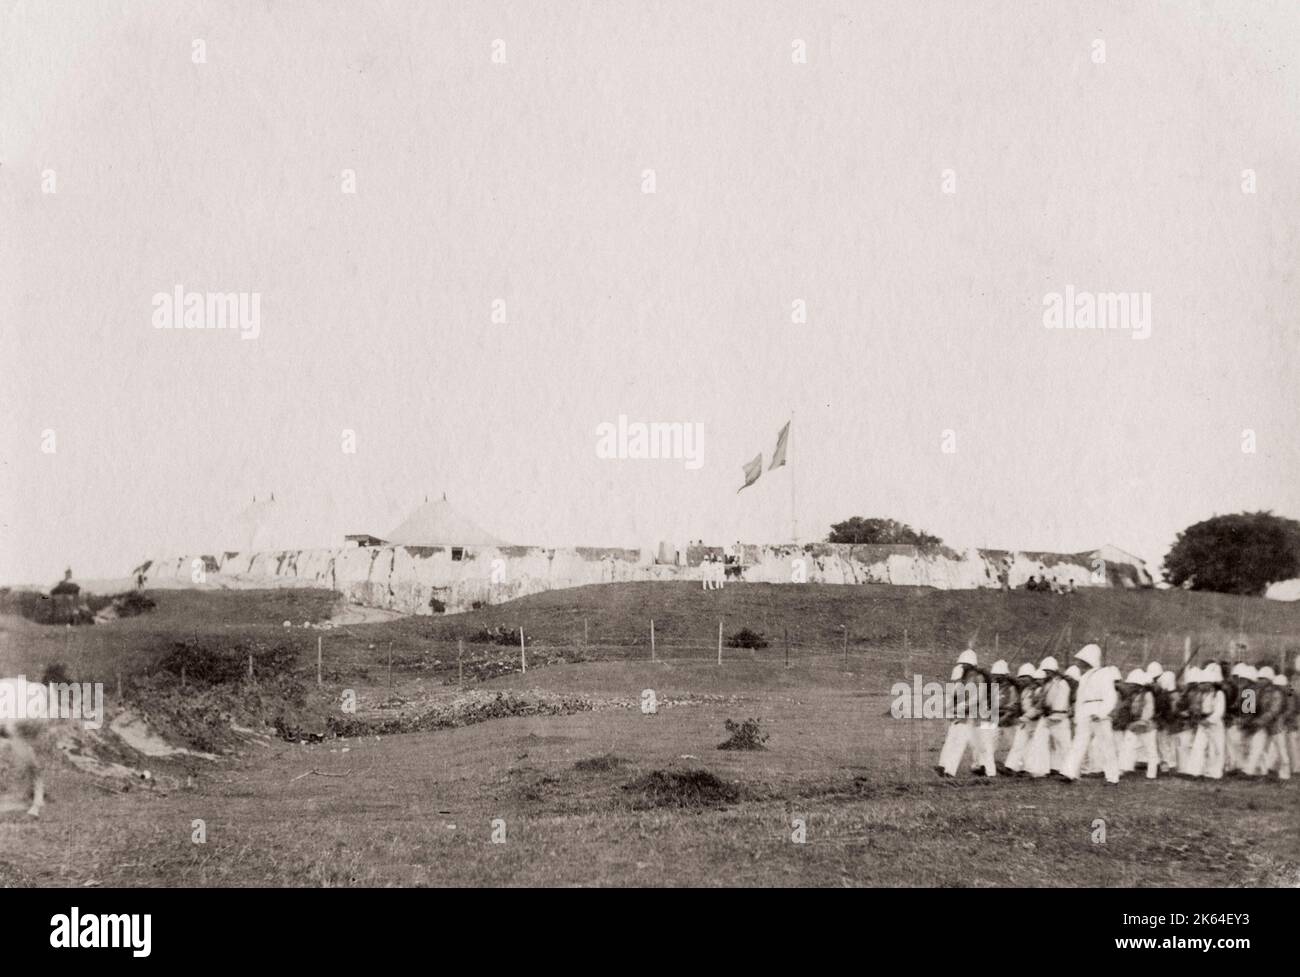 Vintage 19th century photograph: Captioned 'Hova Fort' Tamatave, Toamasina, Madagascar, French soldiers marching past; presumably Fort Manda. Stock Photo